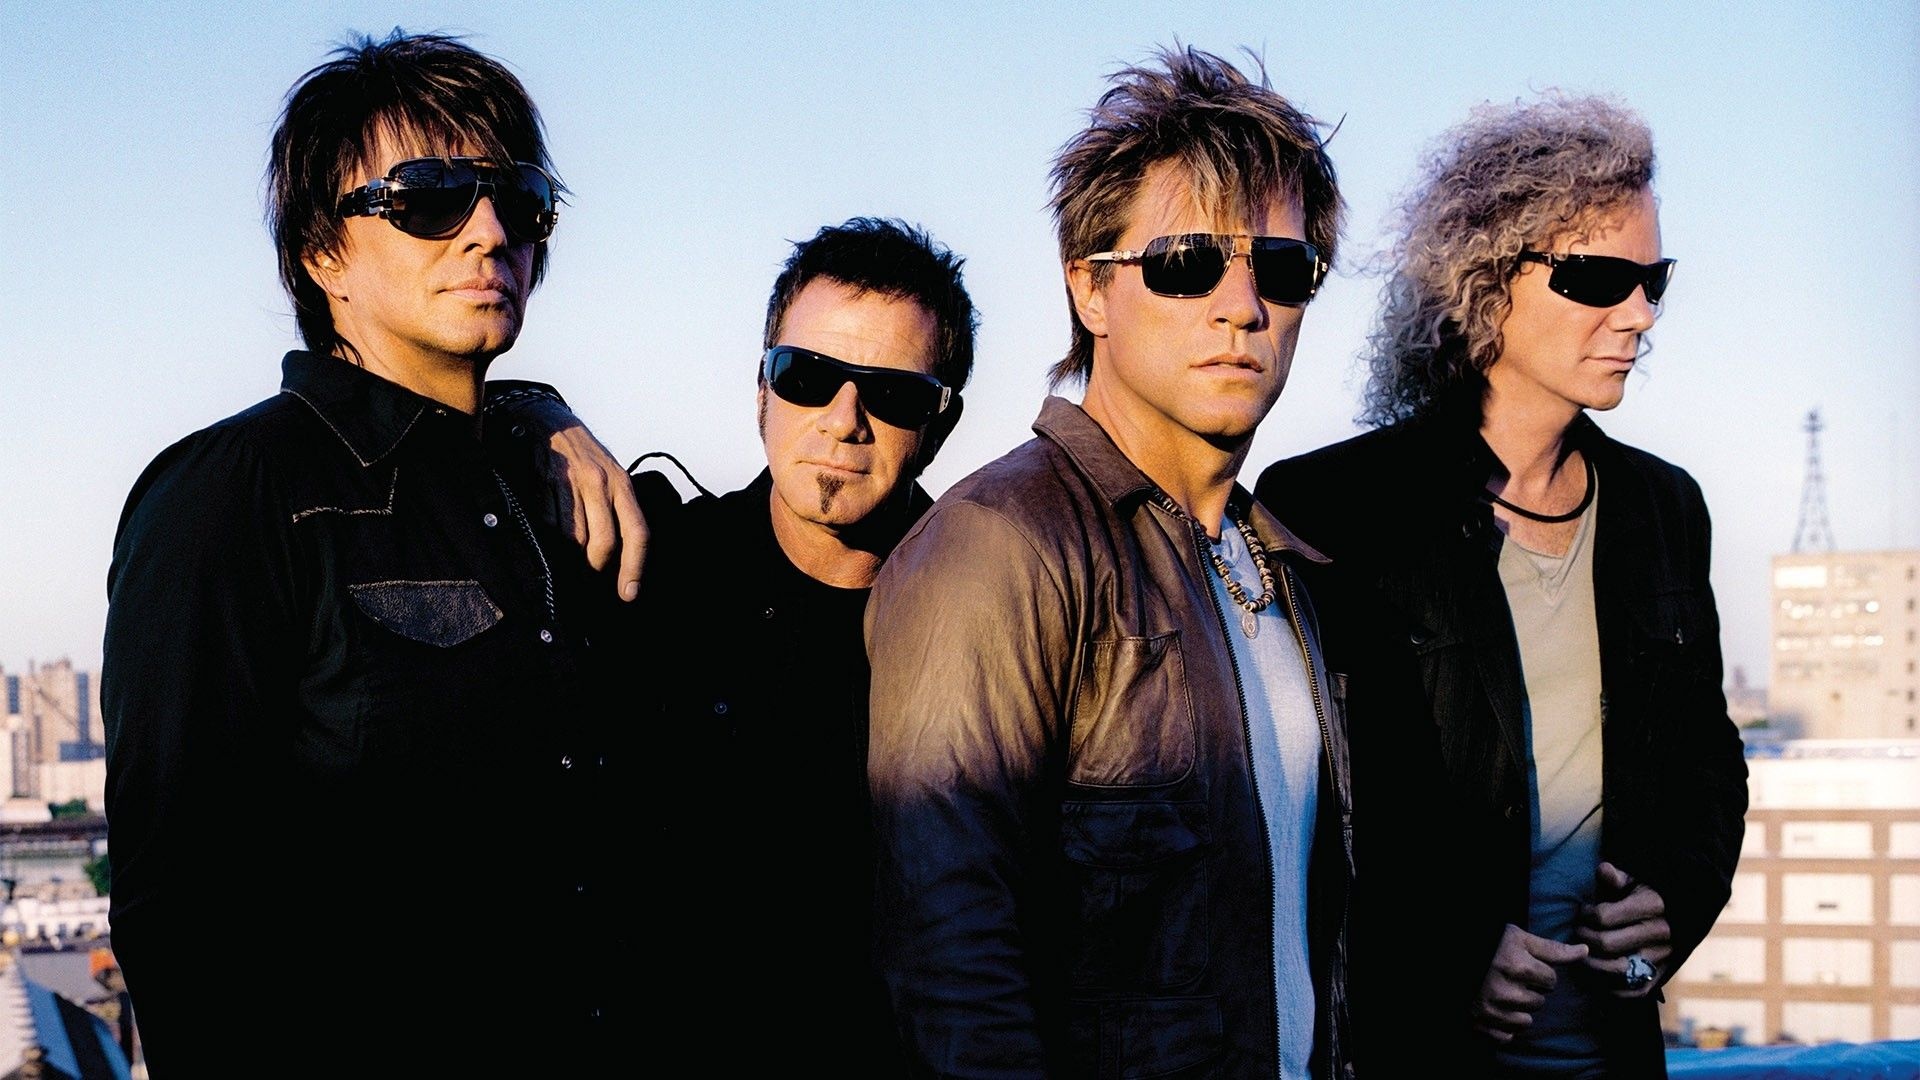 Bon Jovi wallpapers, Rock genre, Band tribute, Iconic album covers, 1920x1080 Full HD Desktop